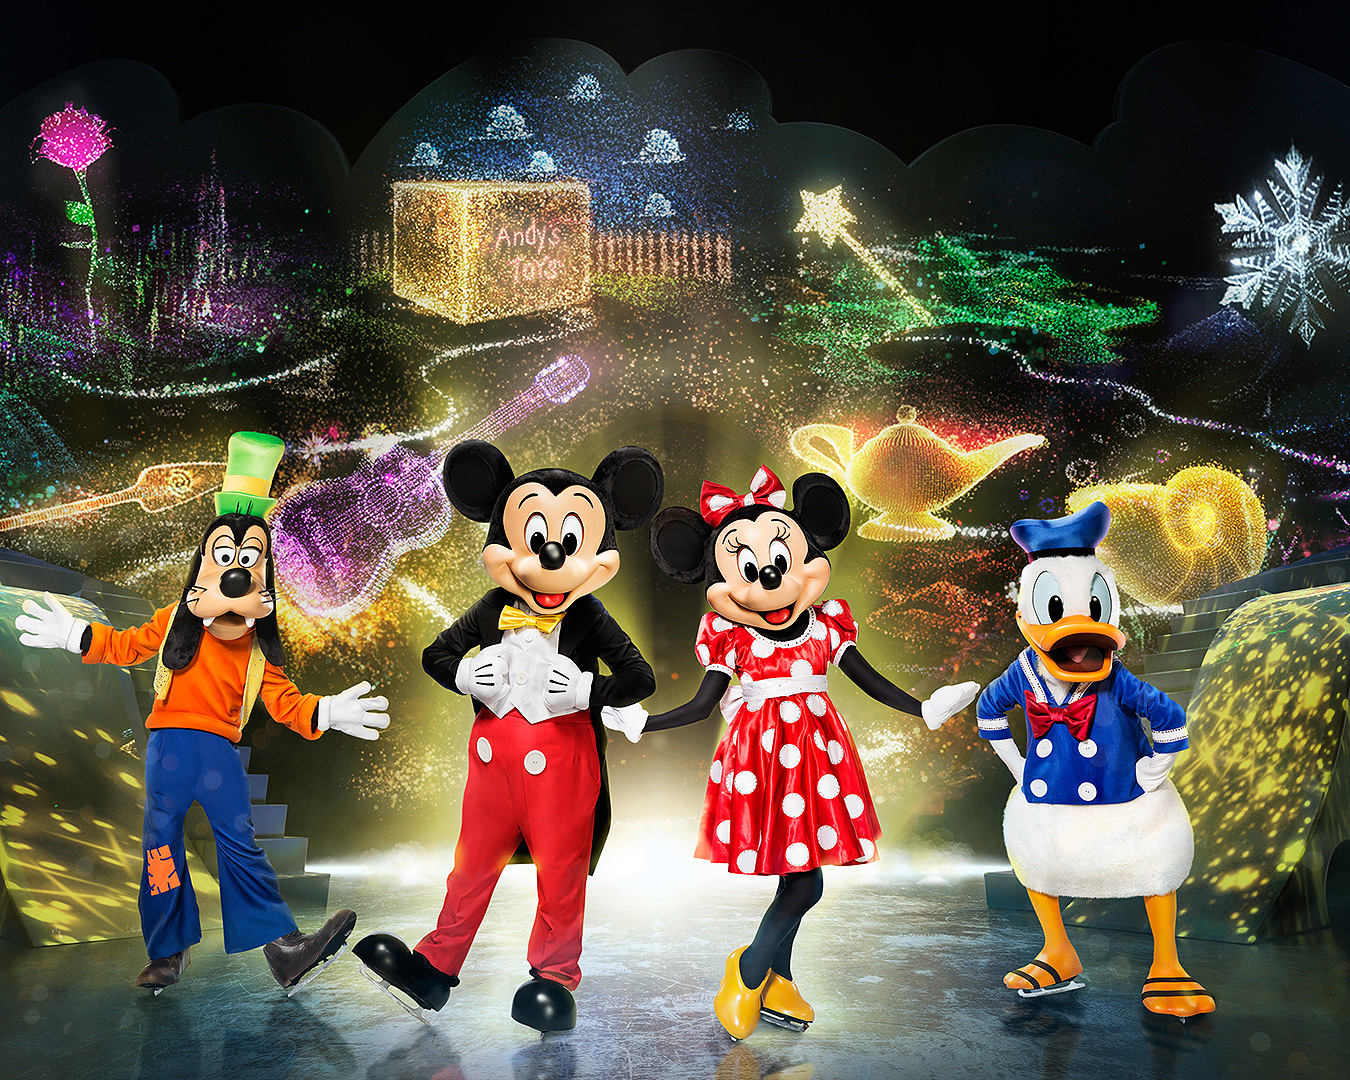 Mickey, Minnie, Goofy, Donald Duck on the ice.